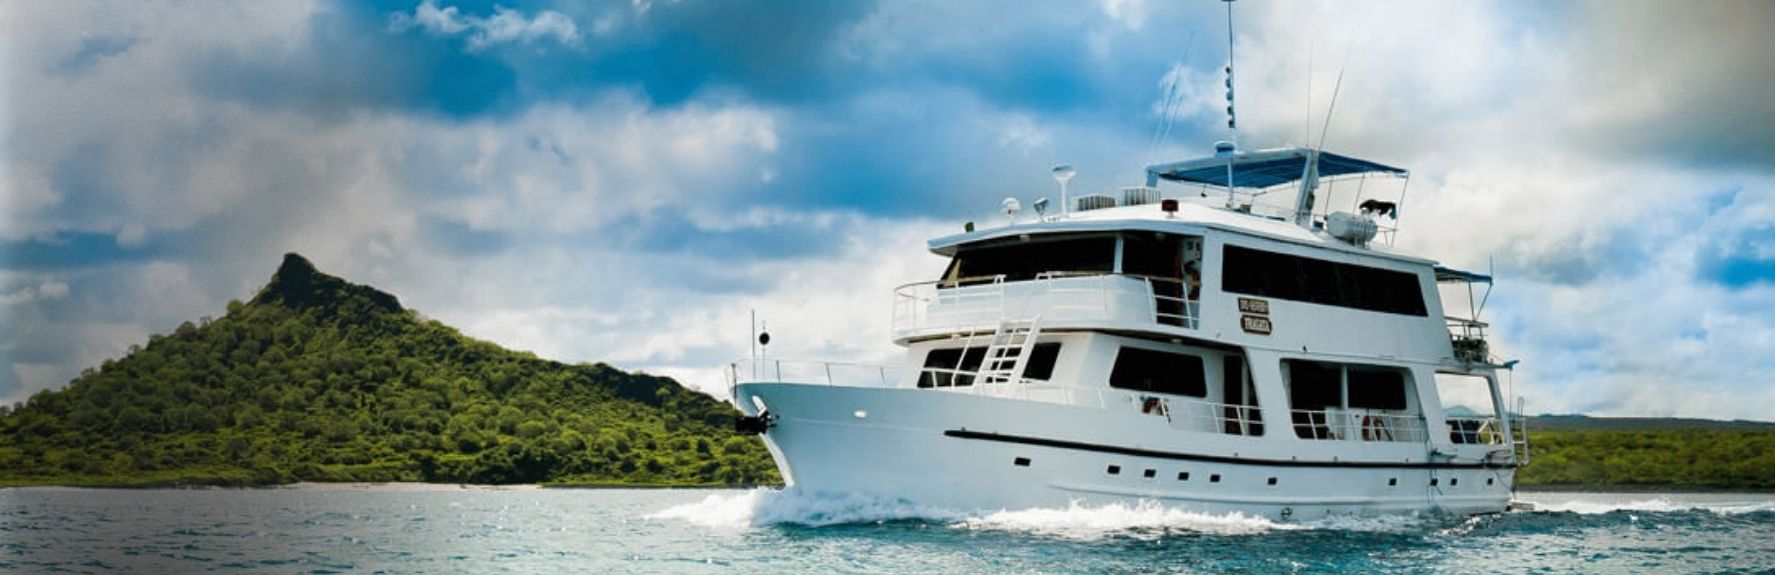 Galapagos Fragata Cruise